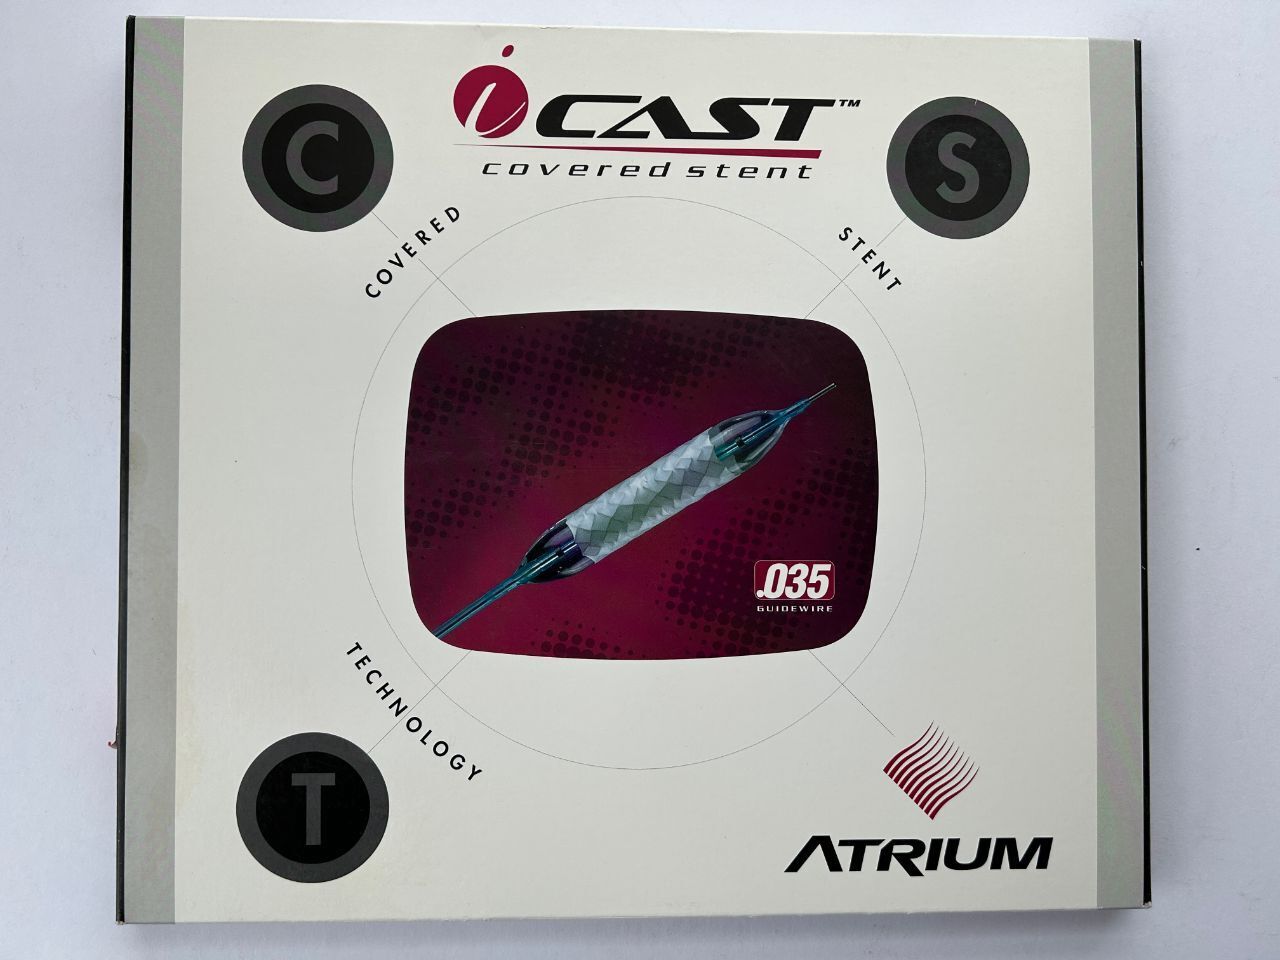 ATRIUM CAST covered stent 10mm x 38mm x 120cm REF: 85424 DATE: 2013/05